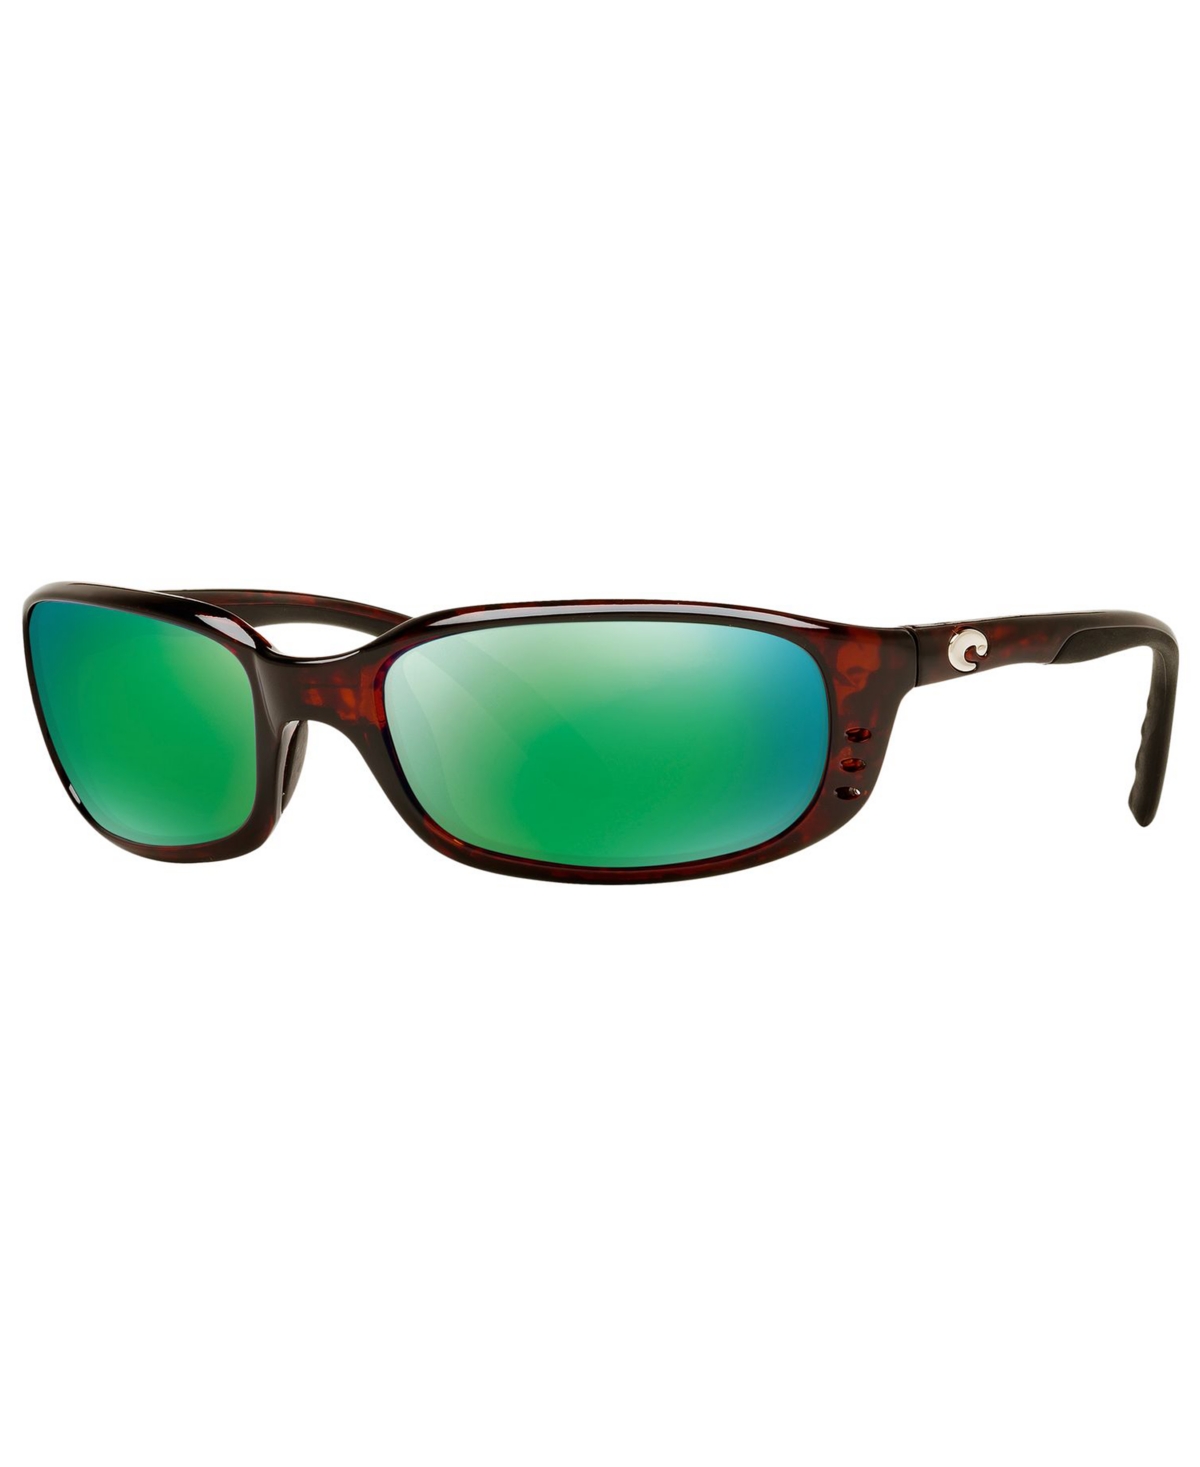 Polarized Sunglasses, Brinep - TORTOISE BROWN/ GREEN POLAR